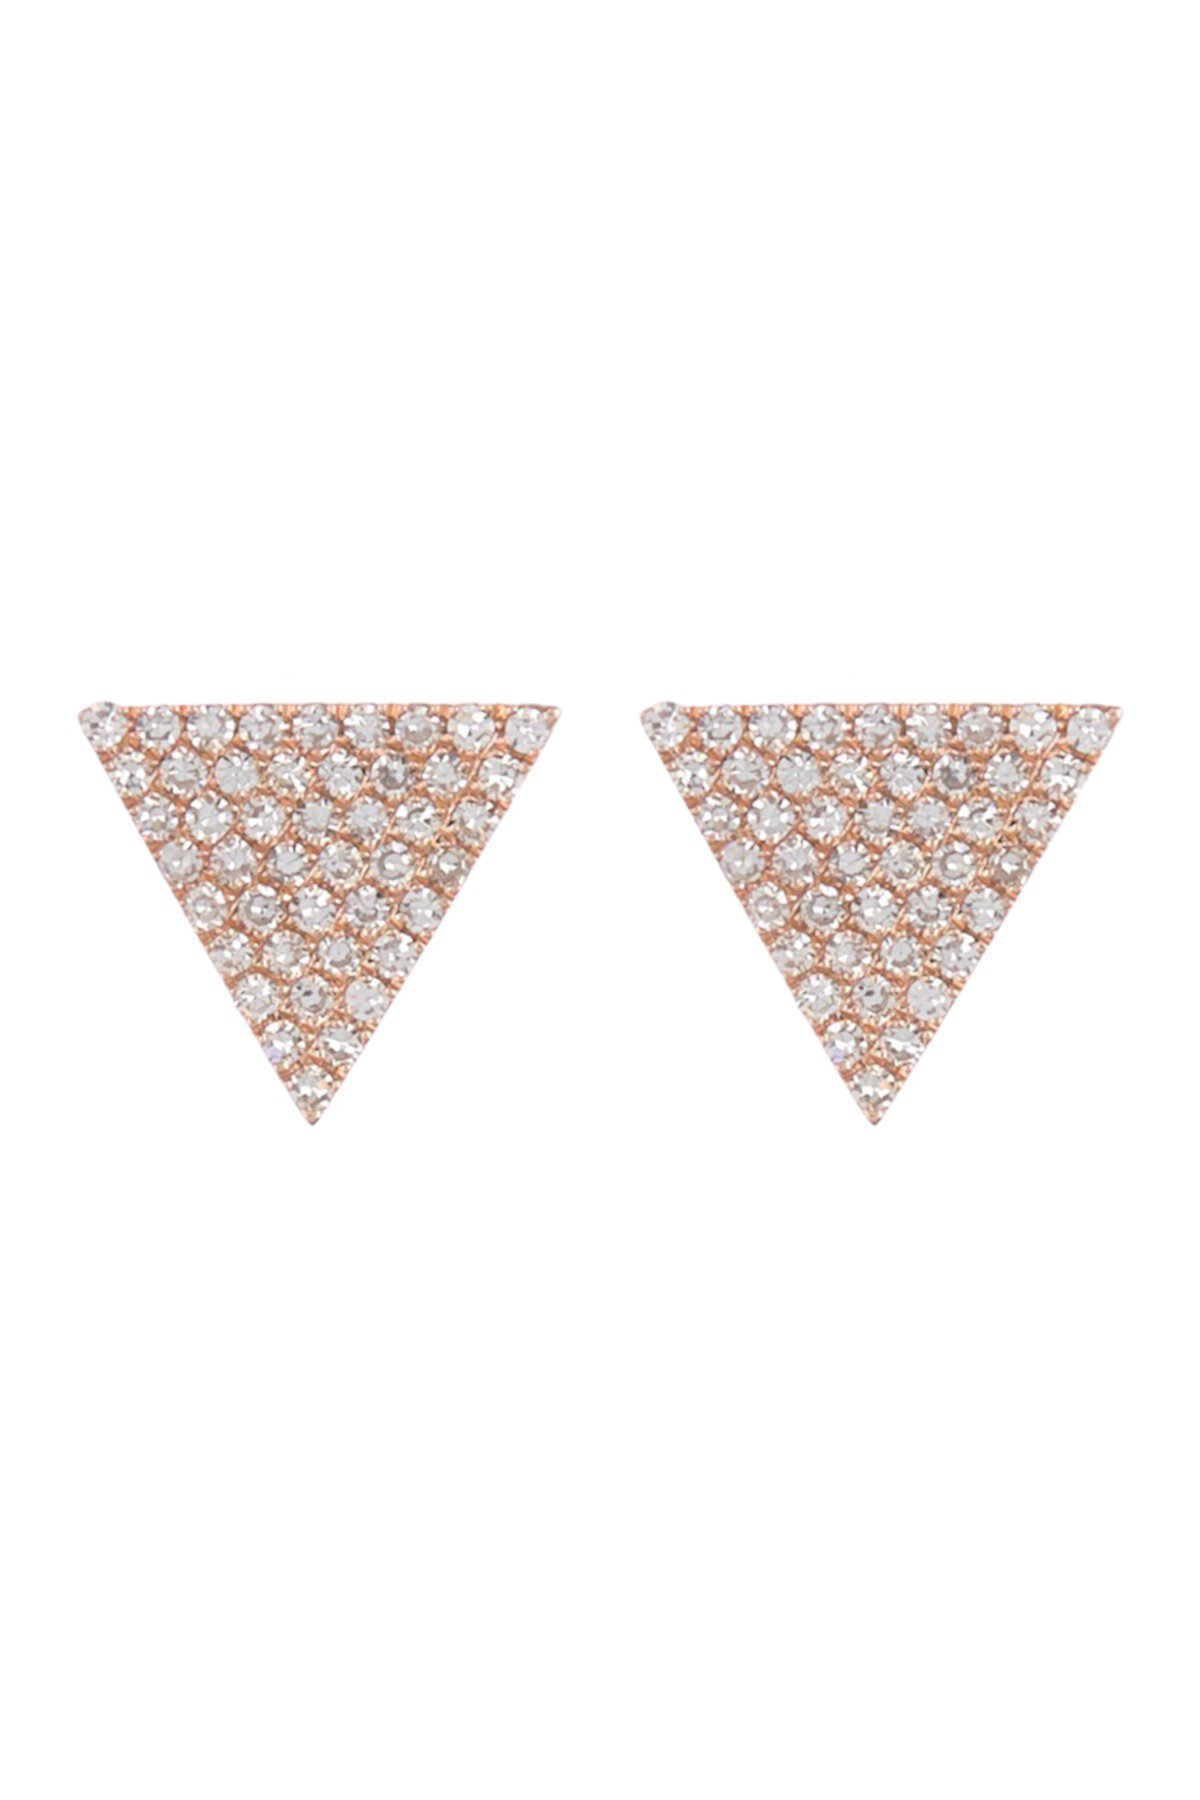 14K Rose Gold Pave Diamond Triangle Stud Earrings - 0.24 ctw Ron Hami